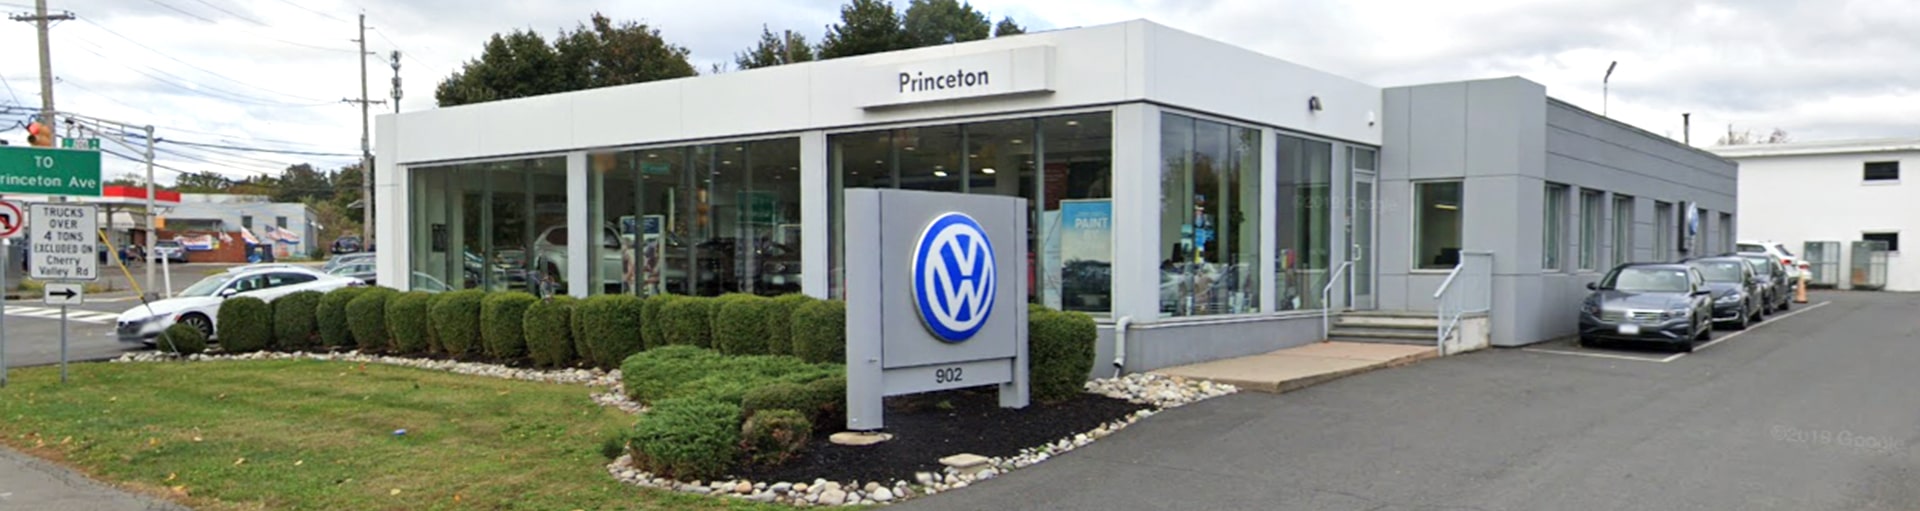 Volkswagen Princeton VW Service Near New Brunswick, NJ